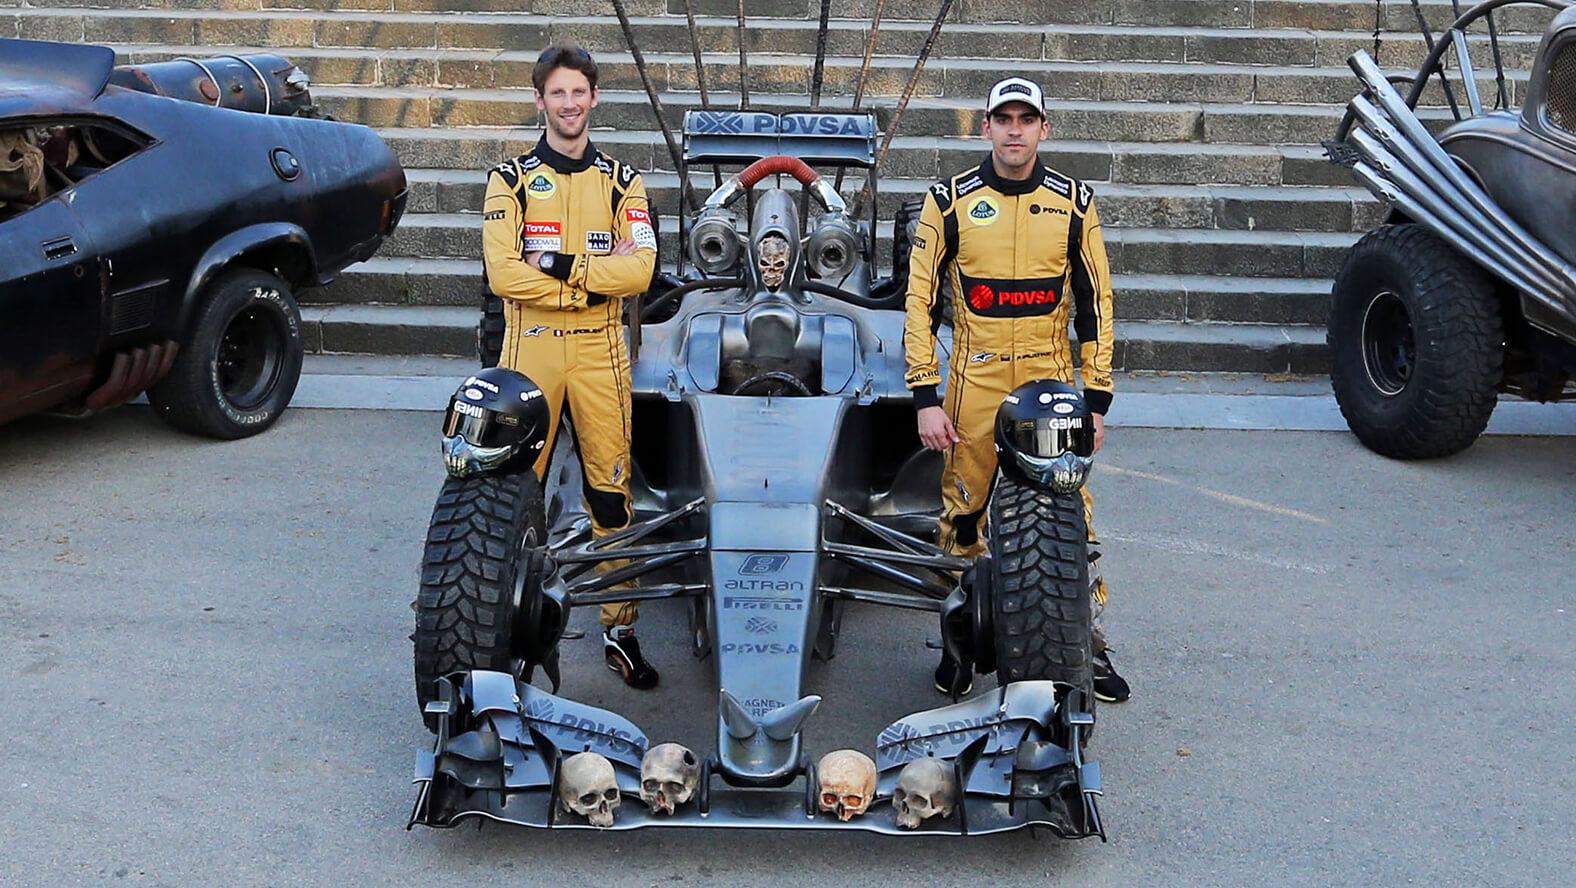 The new car - the Lotus F1 Team Mad Max Hybrid